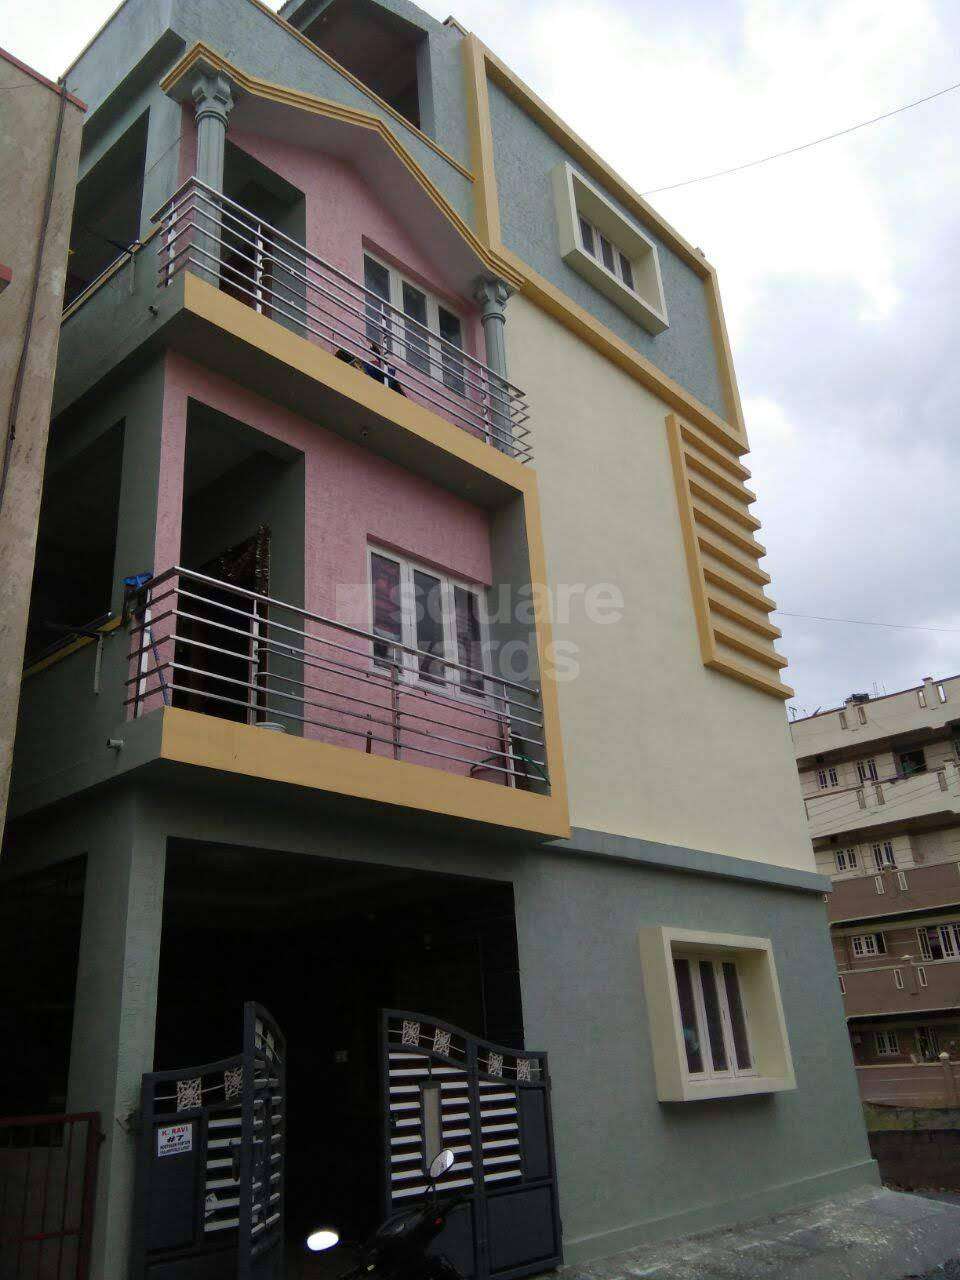 Resale 2.5 Bedroom 600 Sq.Ft. Builder Floor in Kr Puram Bangalore ...